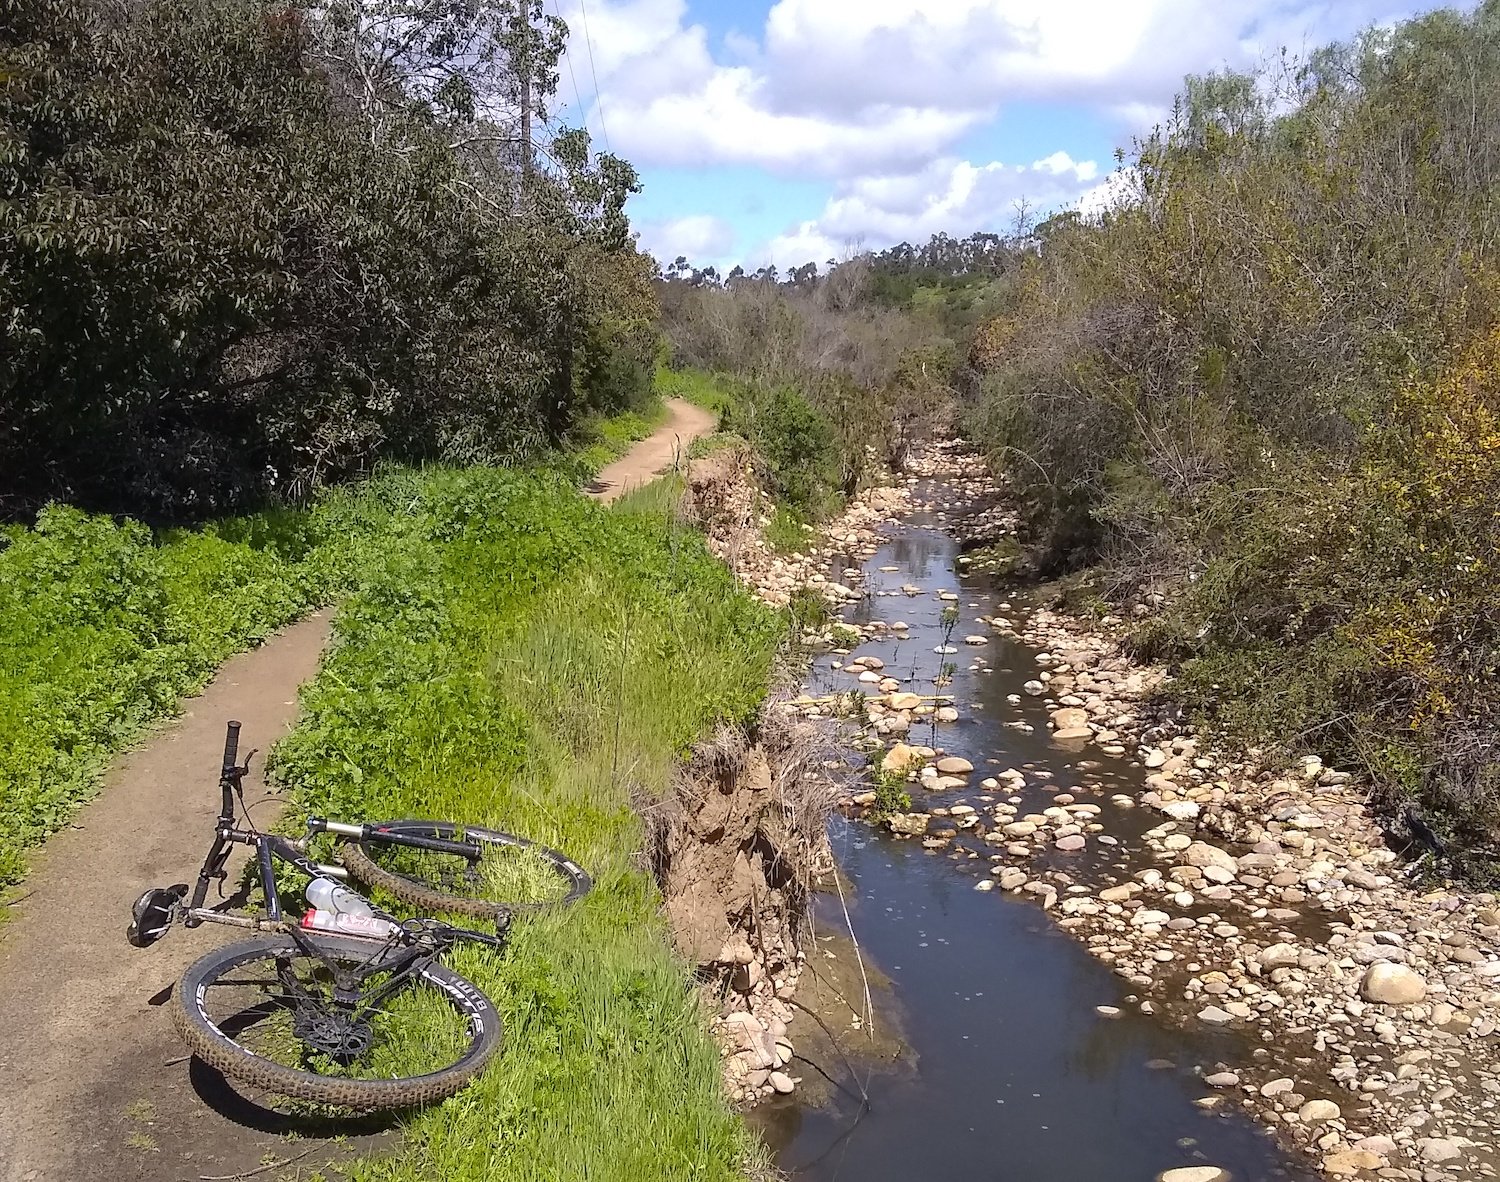 San Diego bike trail called Florida Canyon Trail found close to Balboa Park featuring a mountain bike and a stream